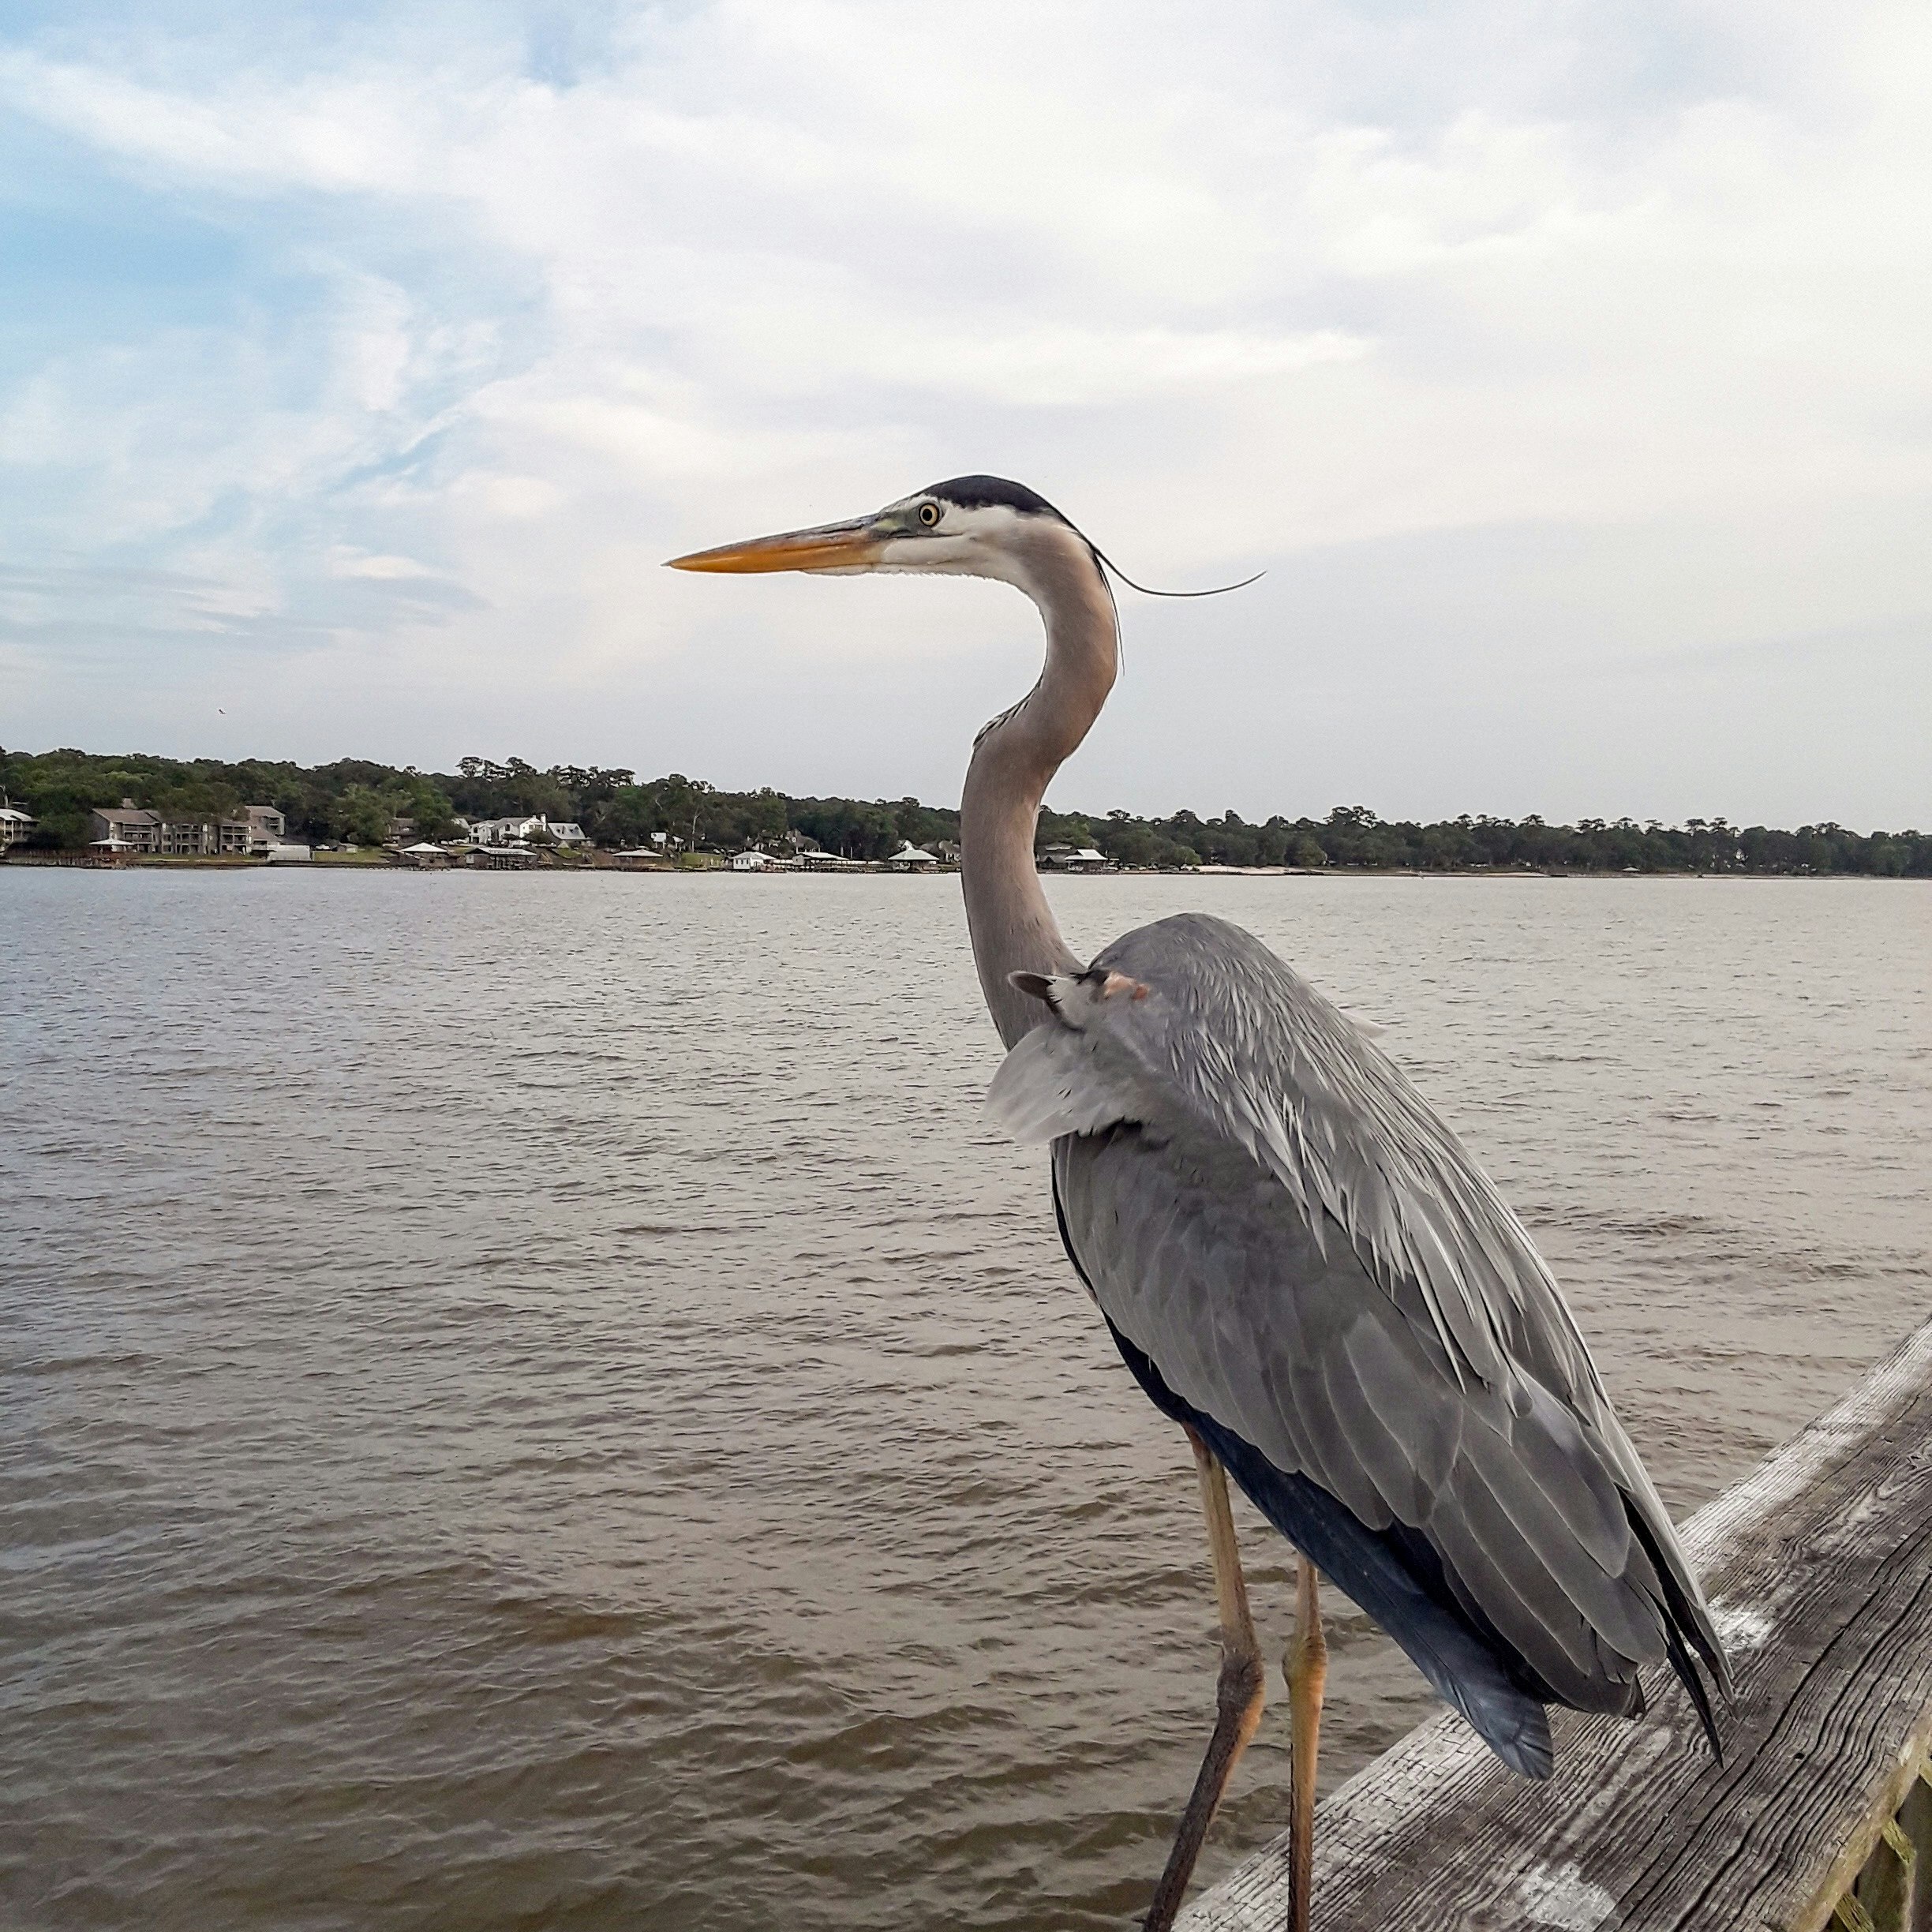 Blue Heron at Fairhope Pier on Mobile Bay, Alabama